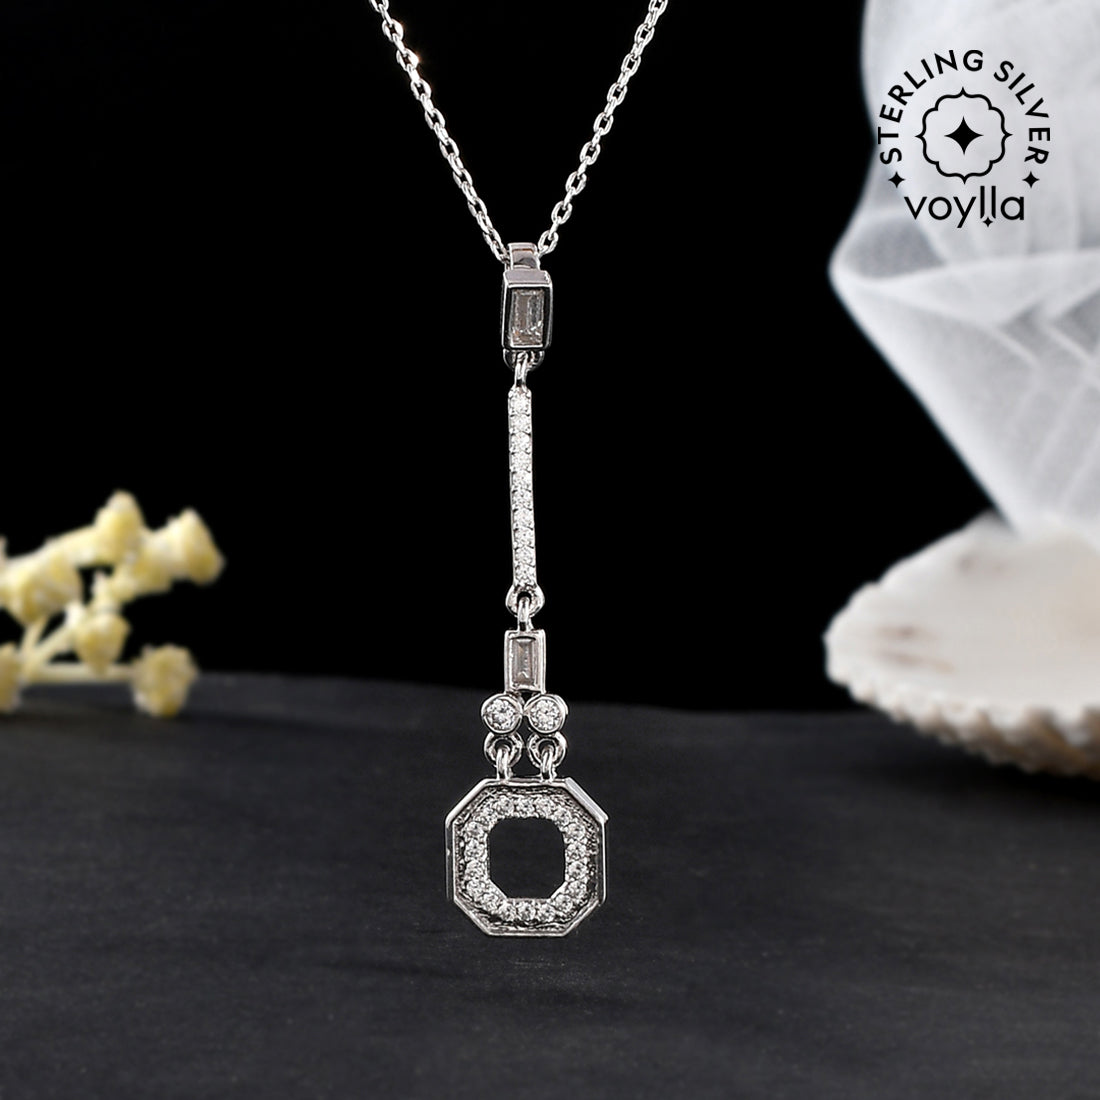 Women's 925 Sterling Silver Round Cut Cz Rectangular Pendant With Chain - Voylla